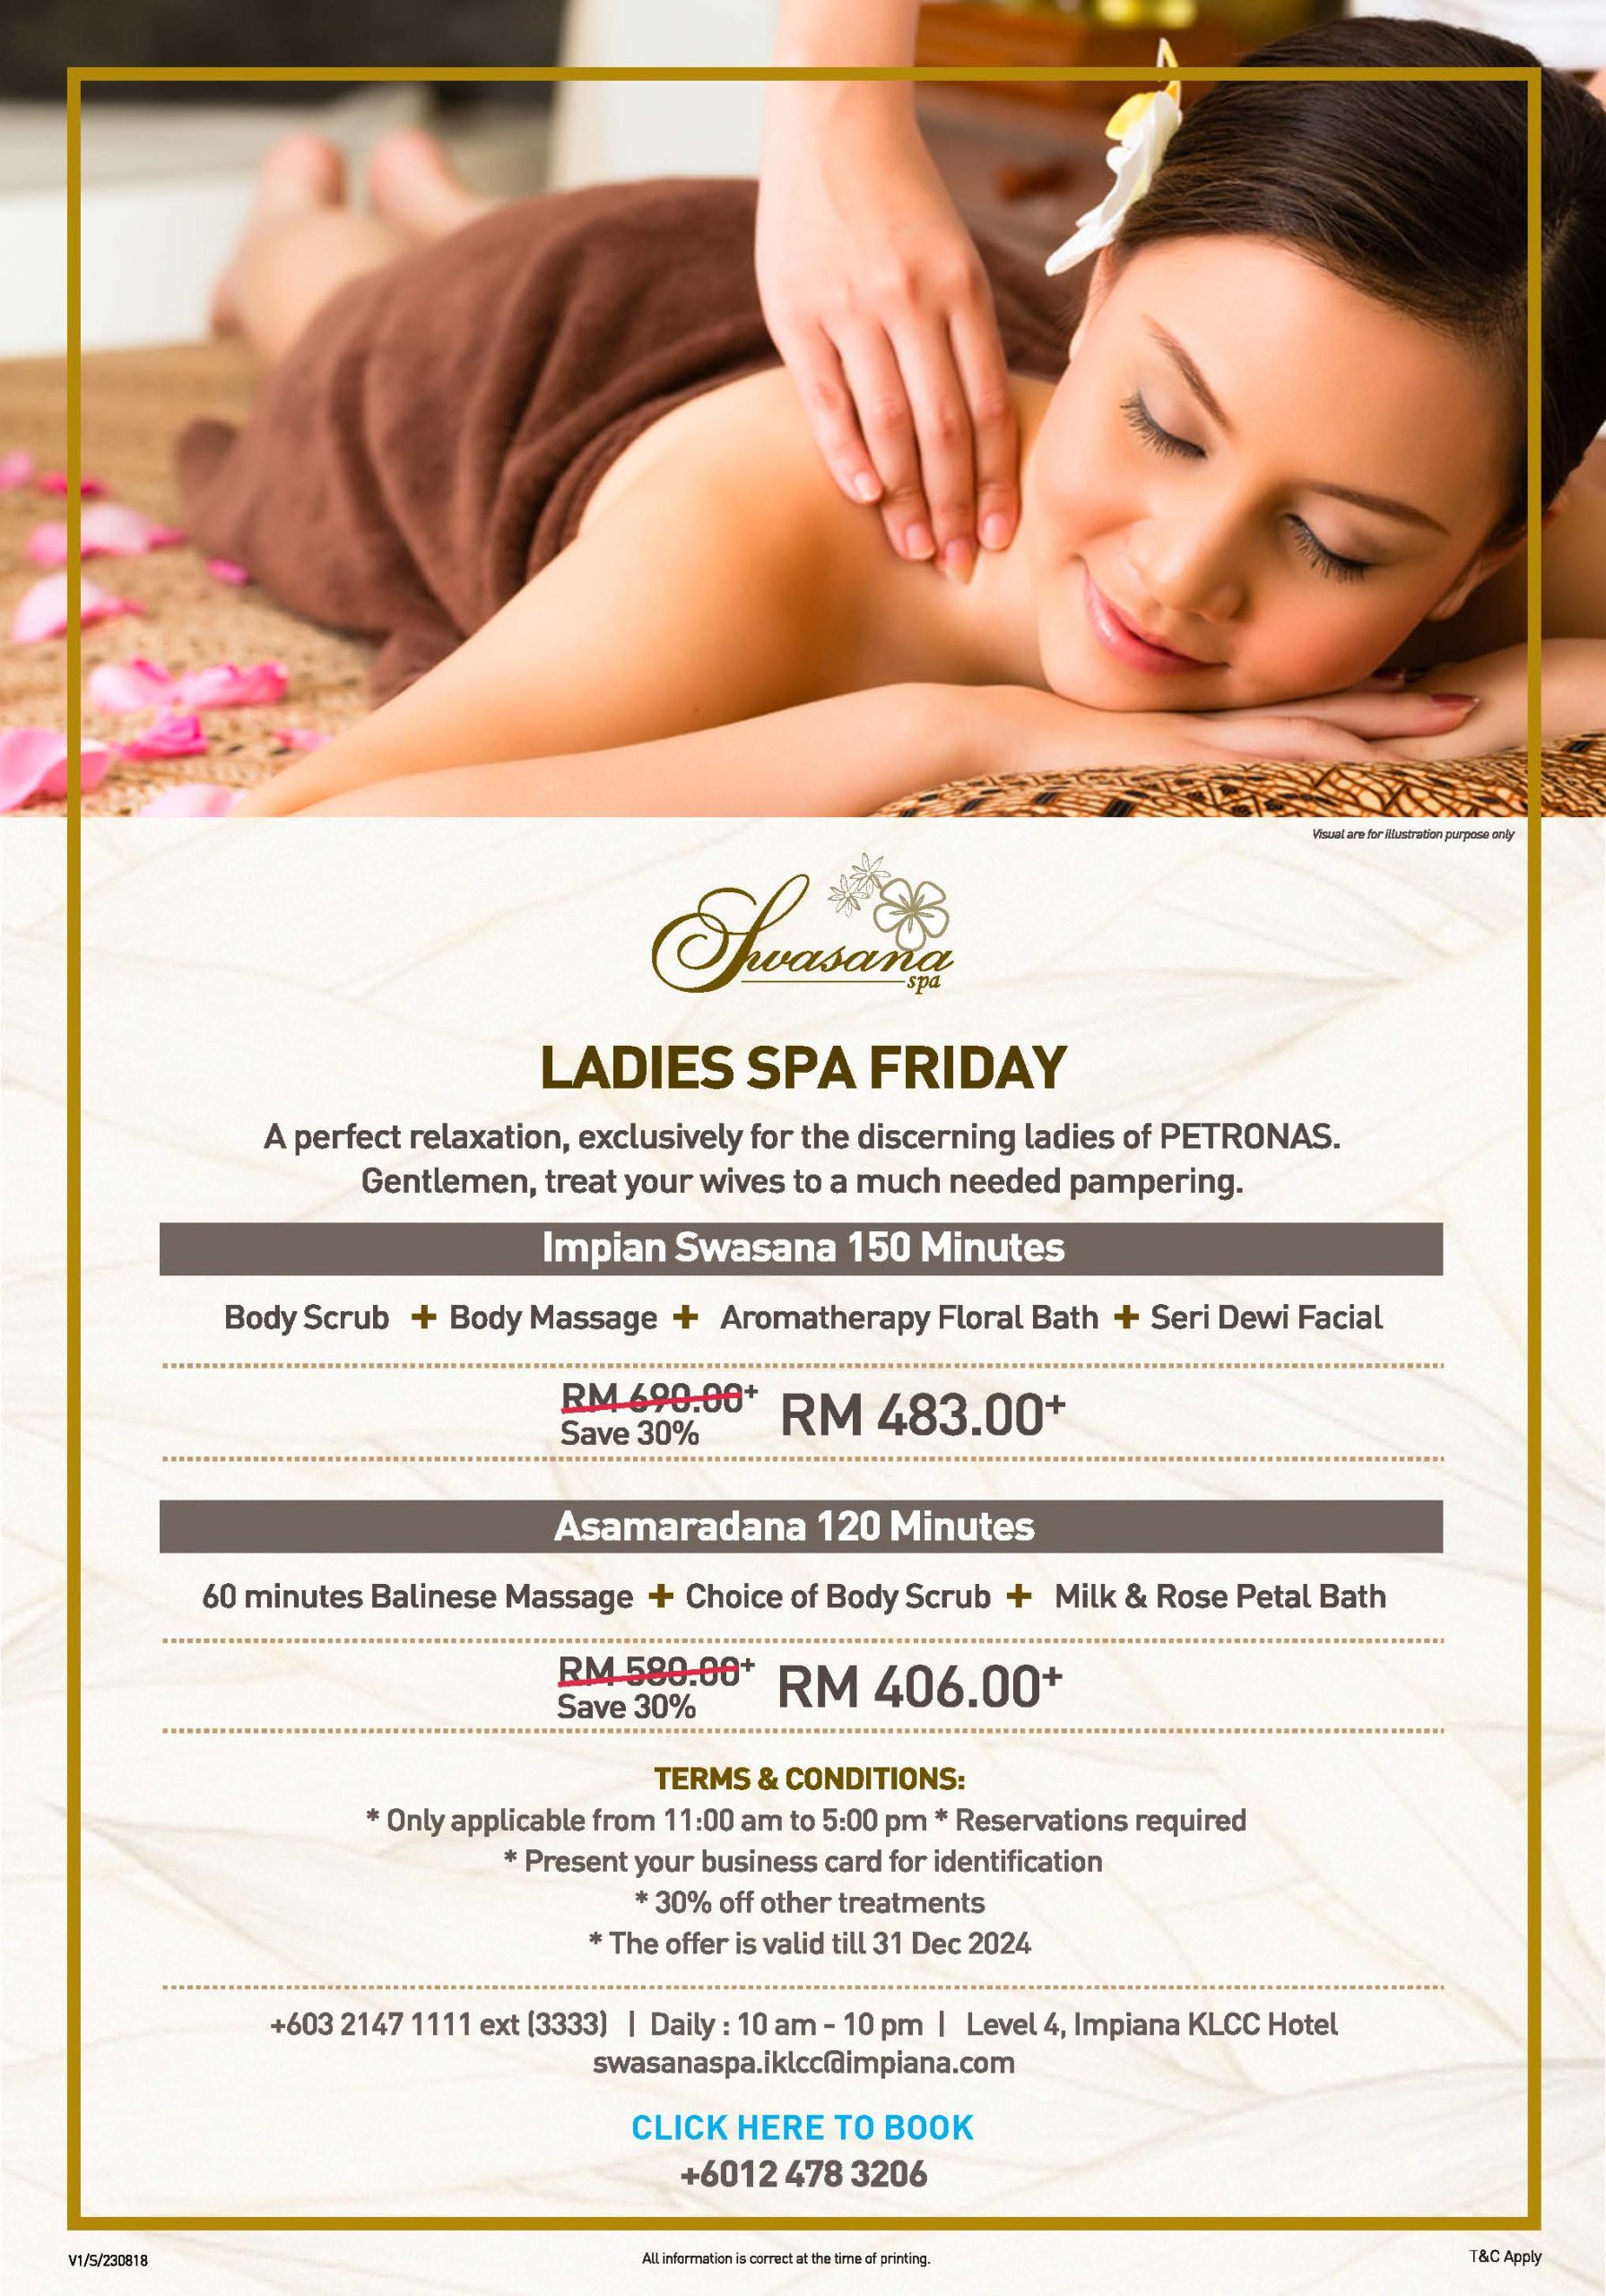 Ladies Spa Friday @ Suasana Spa, Mandarin Oriental Kuala Lumpur